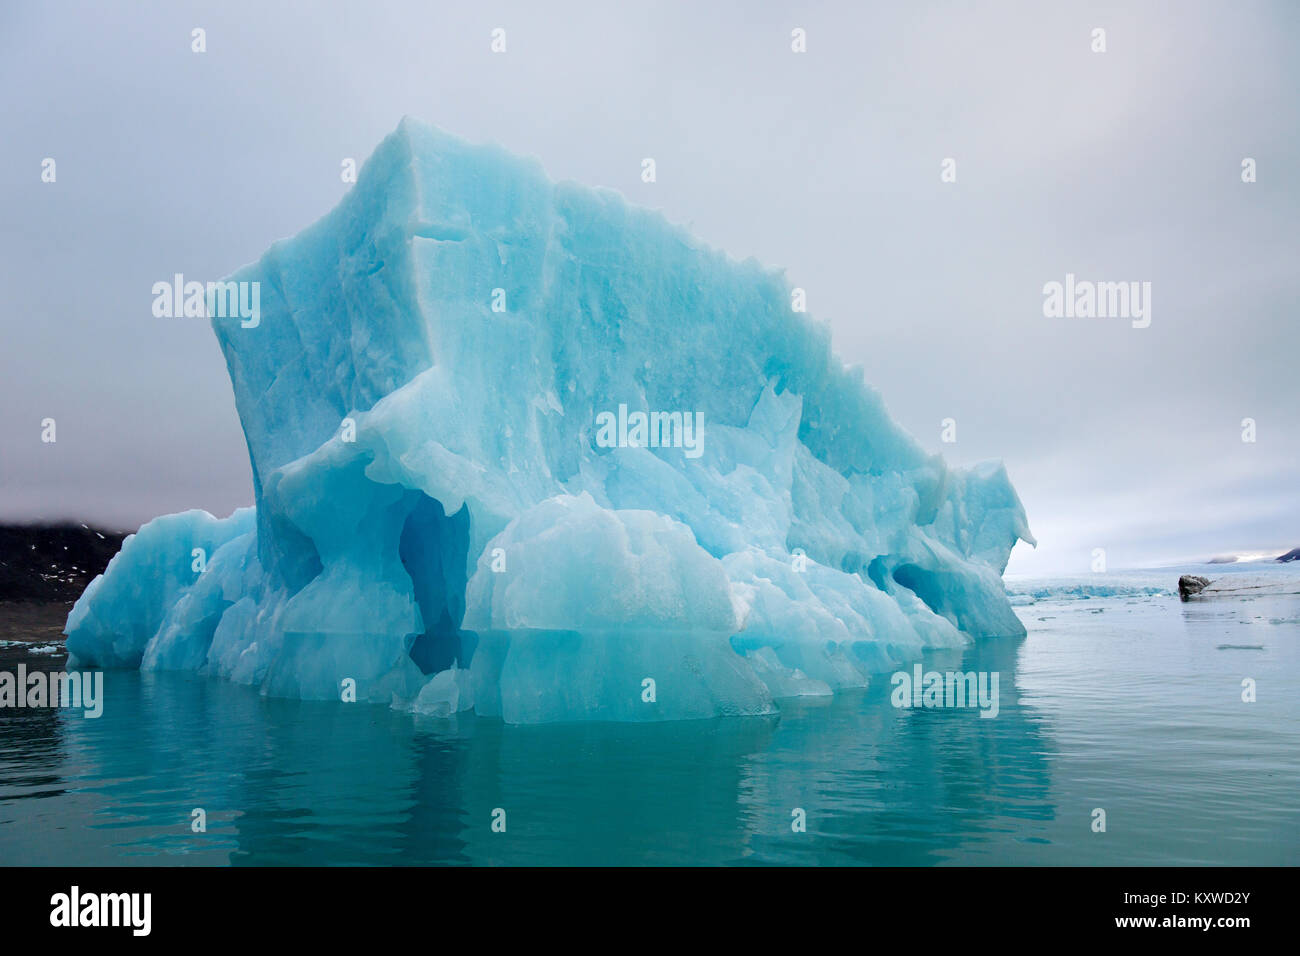 Iceberg in front of Monacobreen, glacier in Haakon VII Land which debouches into Liefdefjorden, Spitsbergen / Svalbard Stock Photo